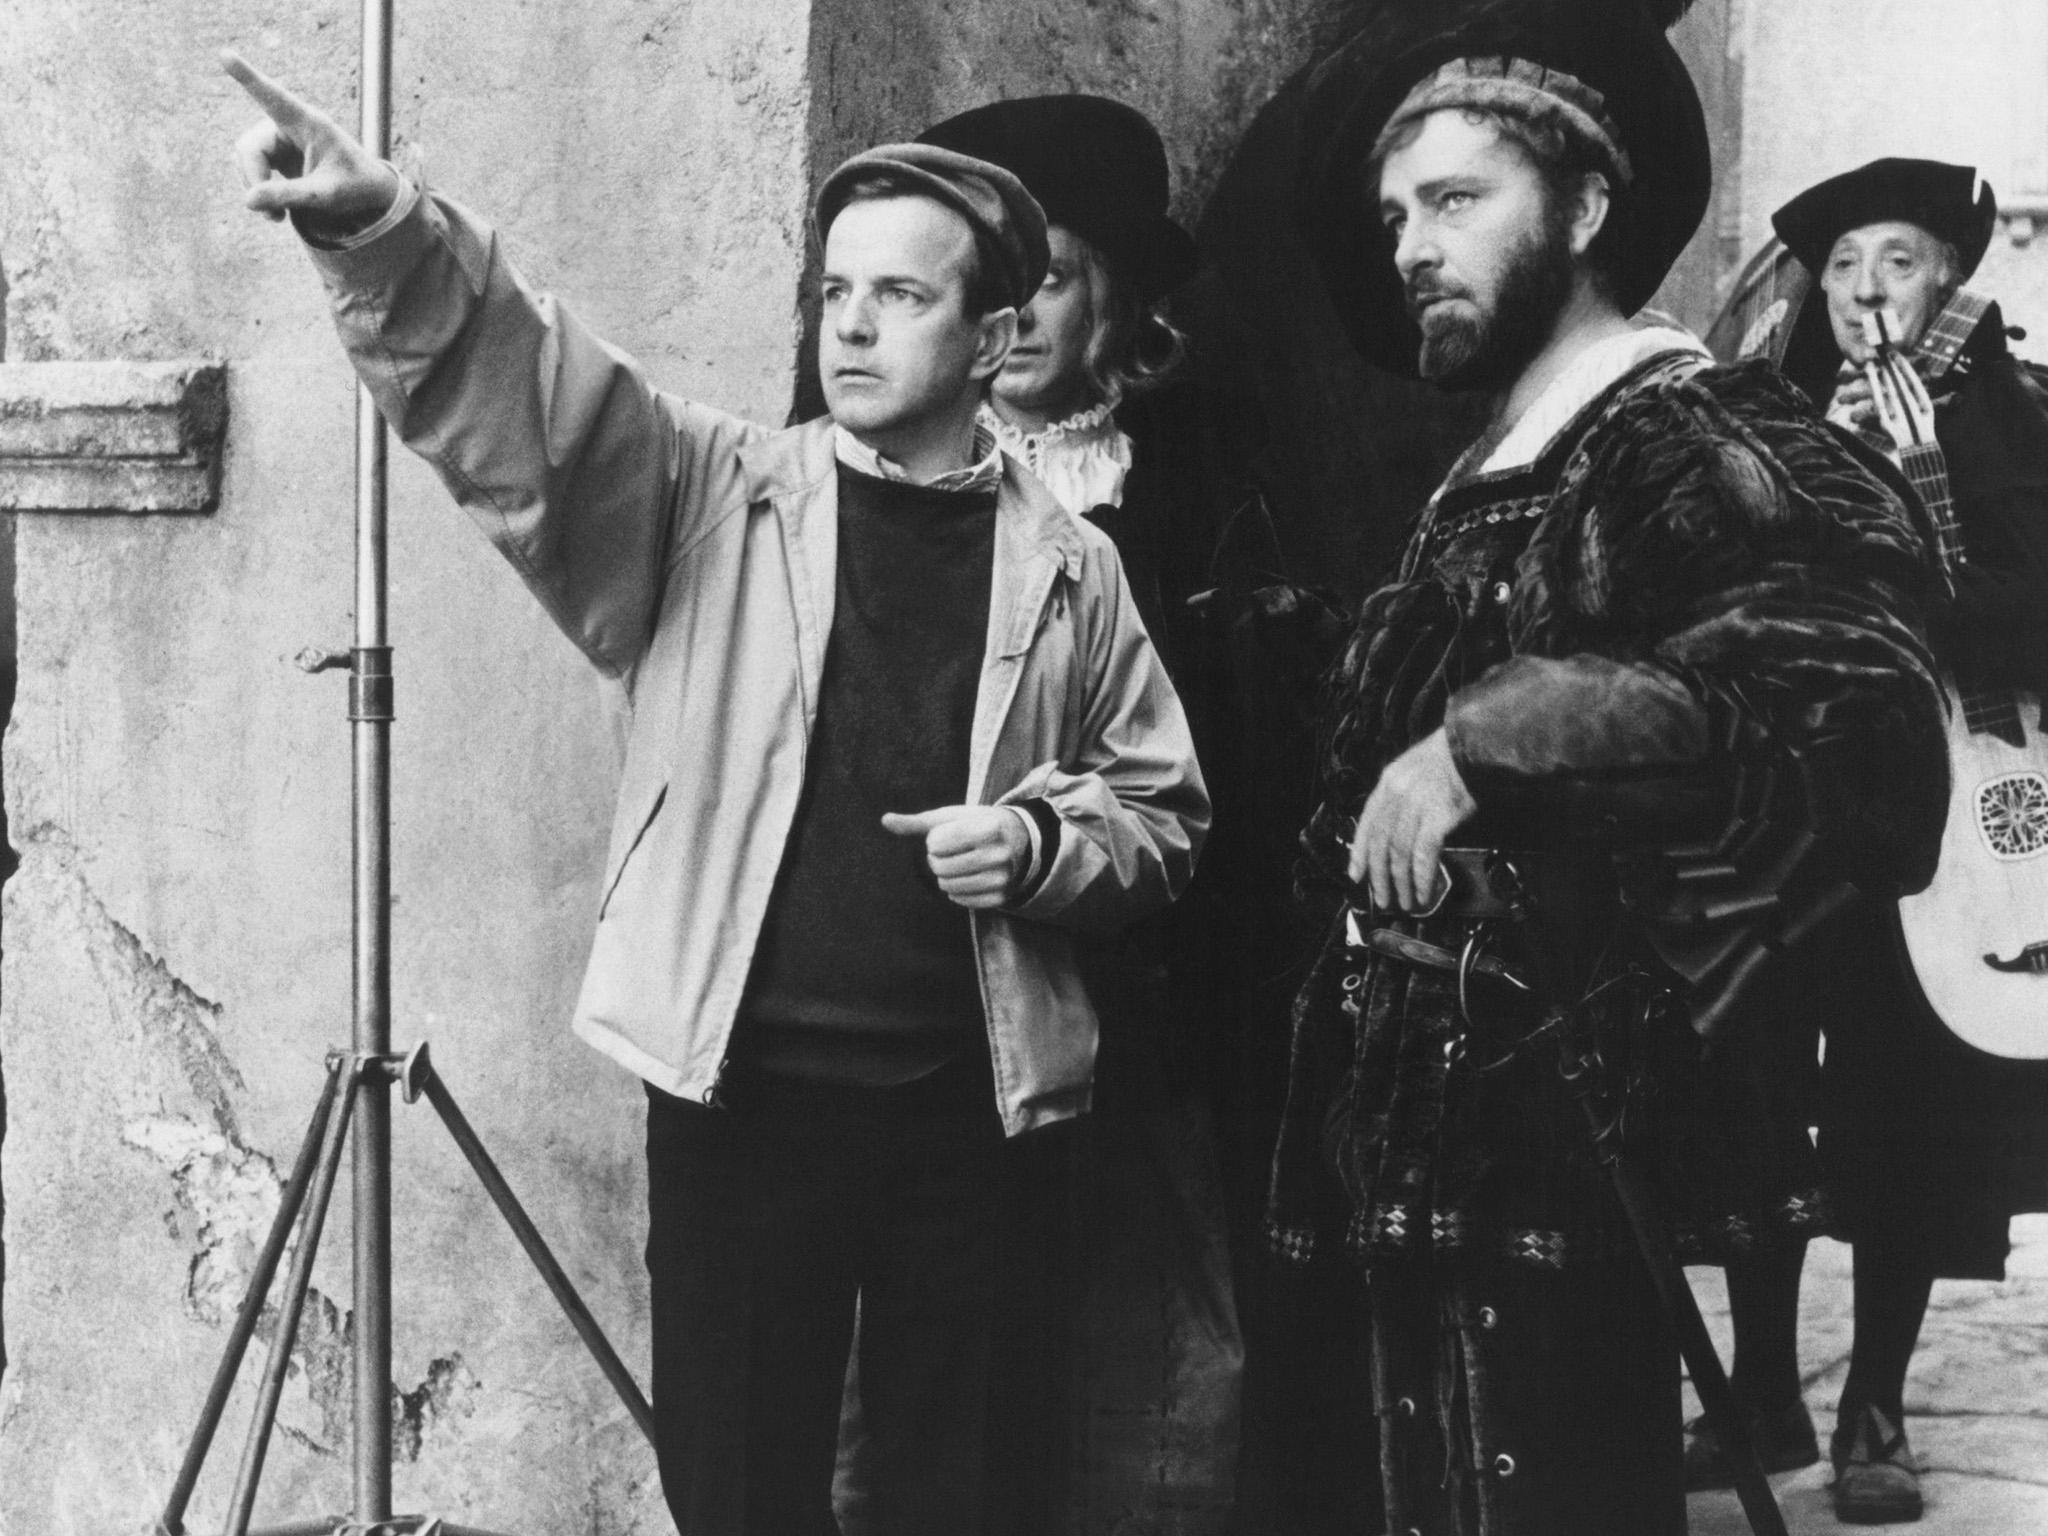 Zeffirelli with Richard Burton on the set of ‘The Taming of the Shrew’, 1967